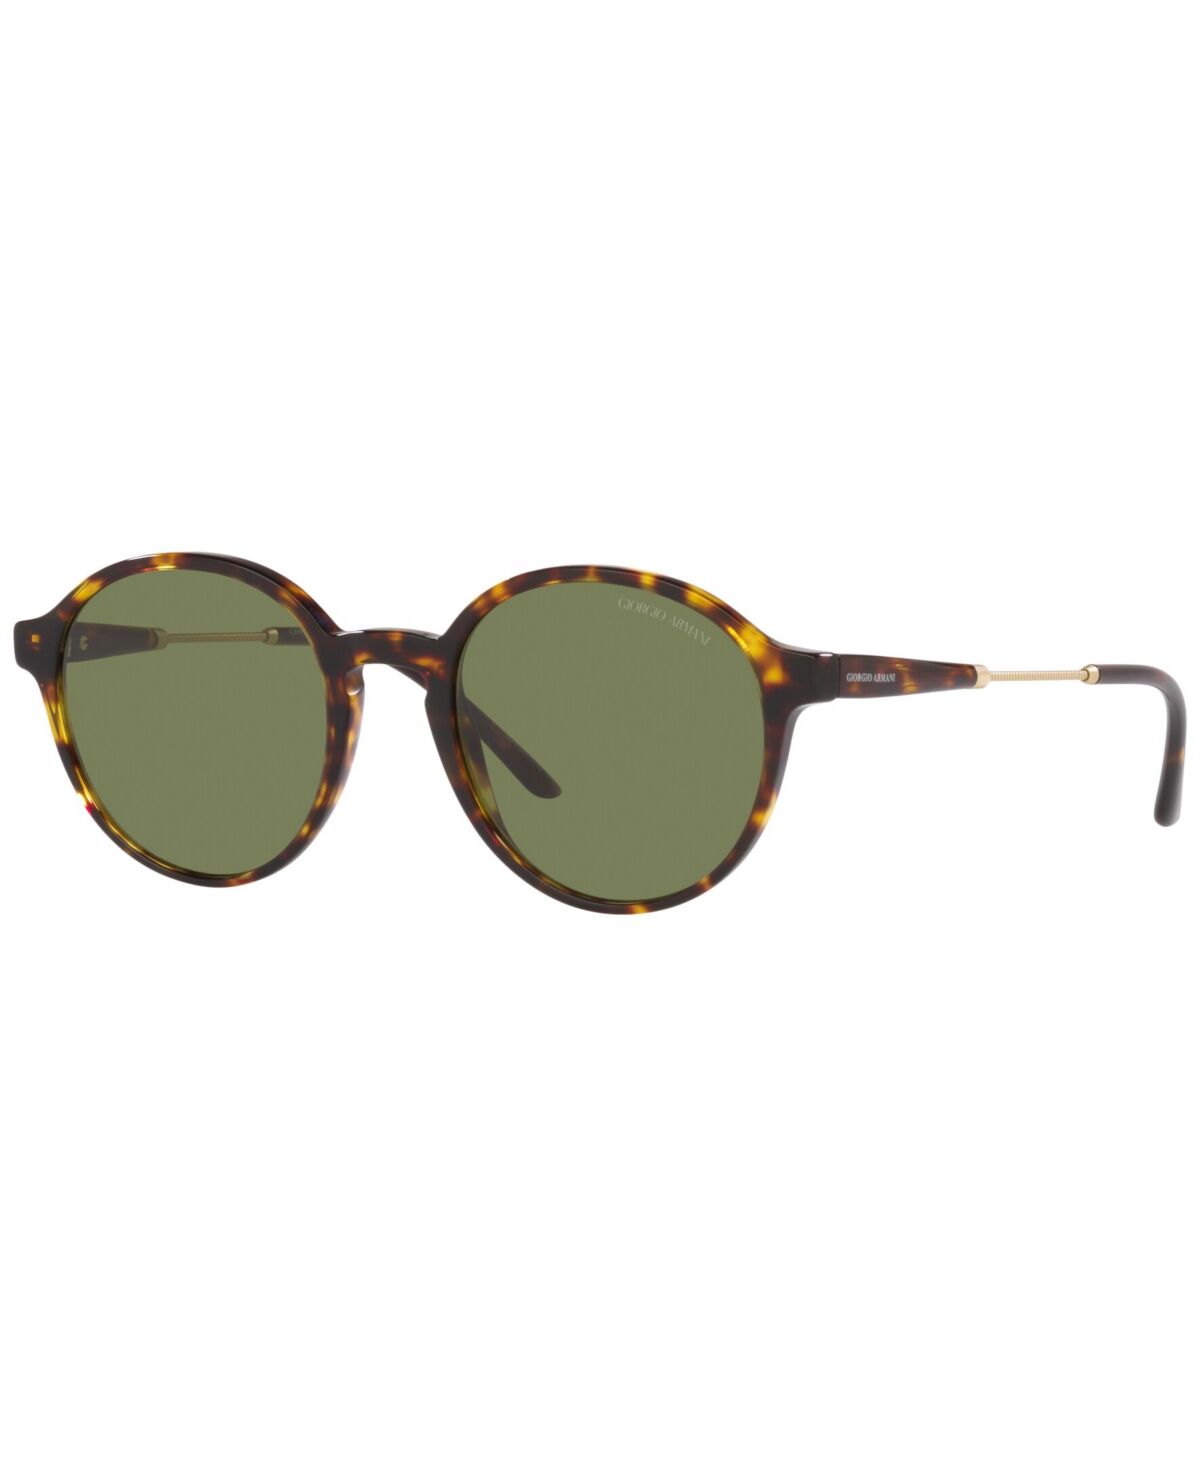 Giorgio Armani s Sunglasses, 51 - Havana